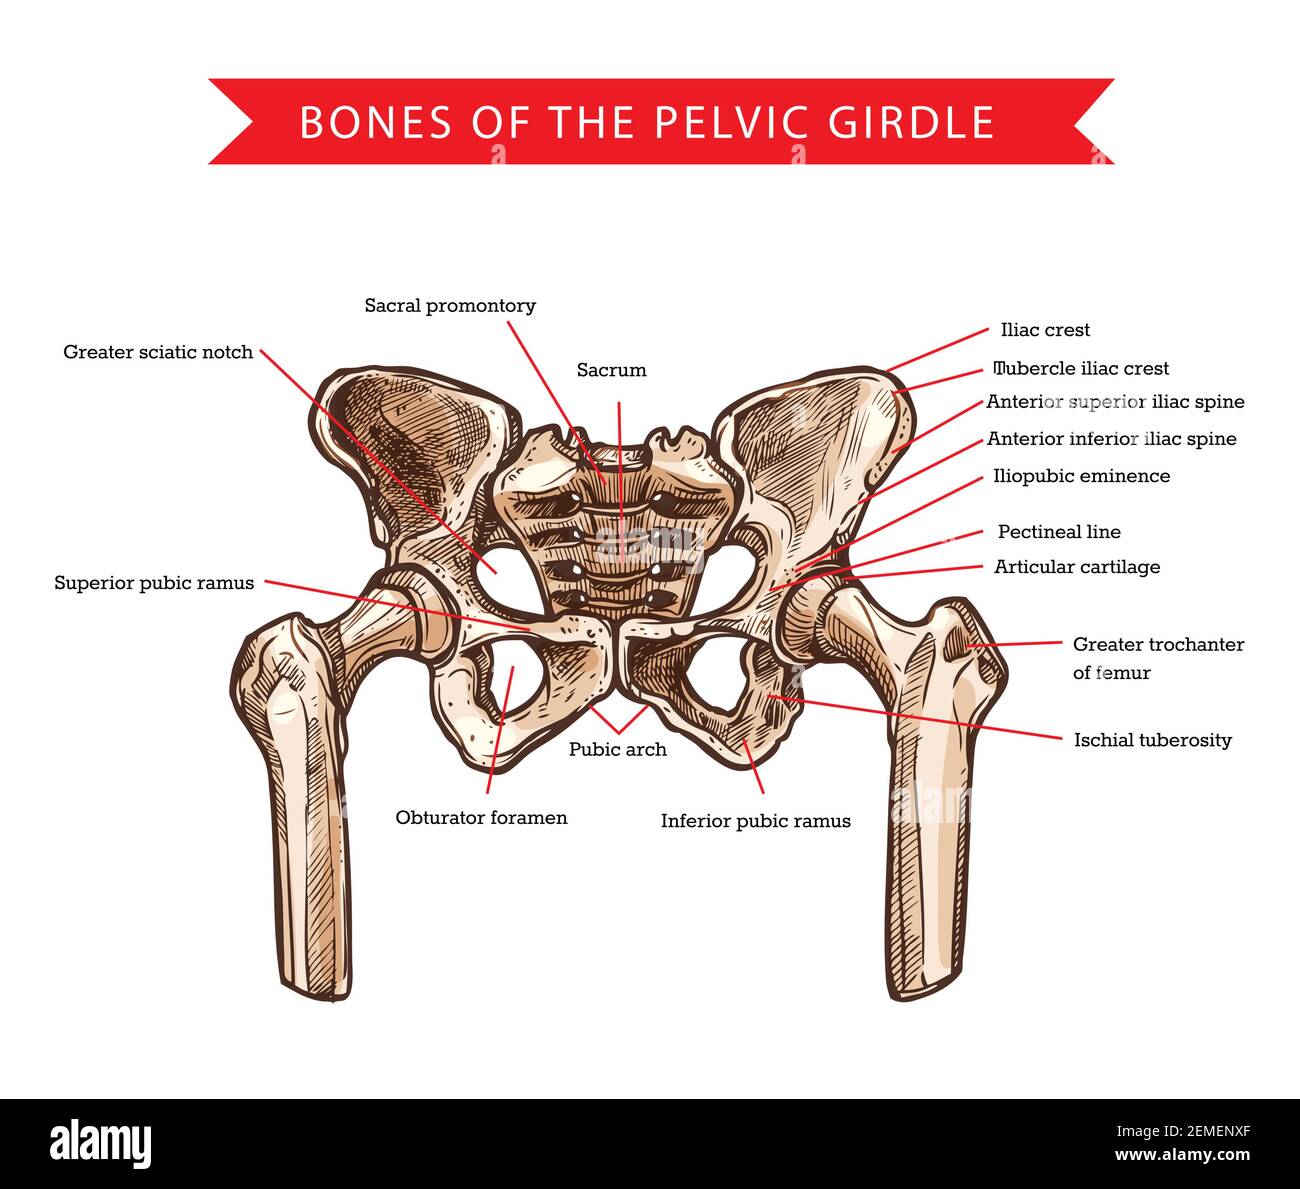 https://c8.alamy.com/comp/2EMENXF/pelvis-bones-of-pelvic-girdle-vector-sketch-of-human-anatomy-and-medicine-bones-and-joints-structure-of-skeleton-hips-sacrum-femur-and-coccyx-sac-2EMENXF.jpg